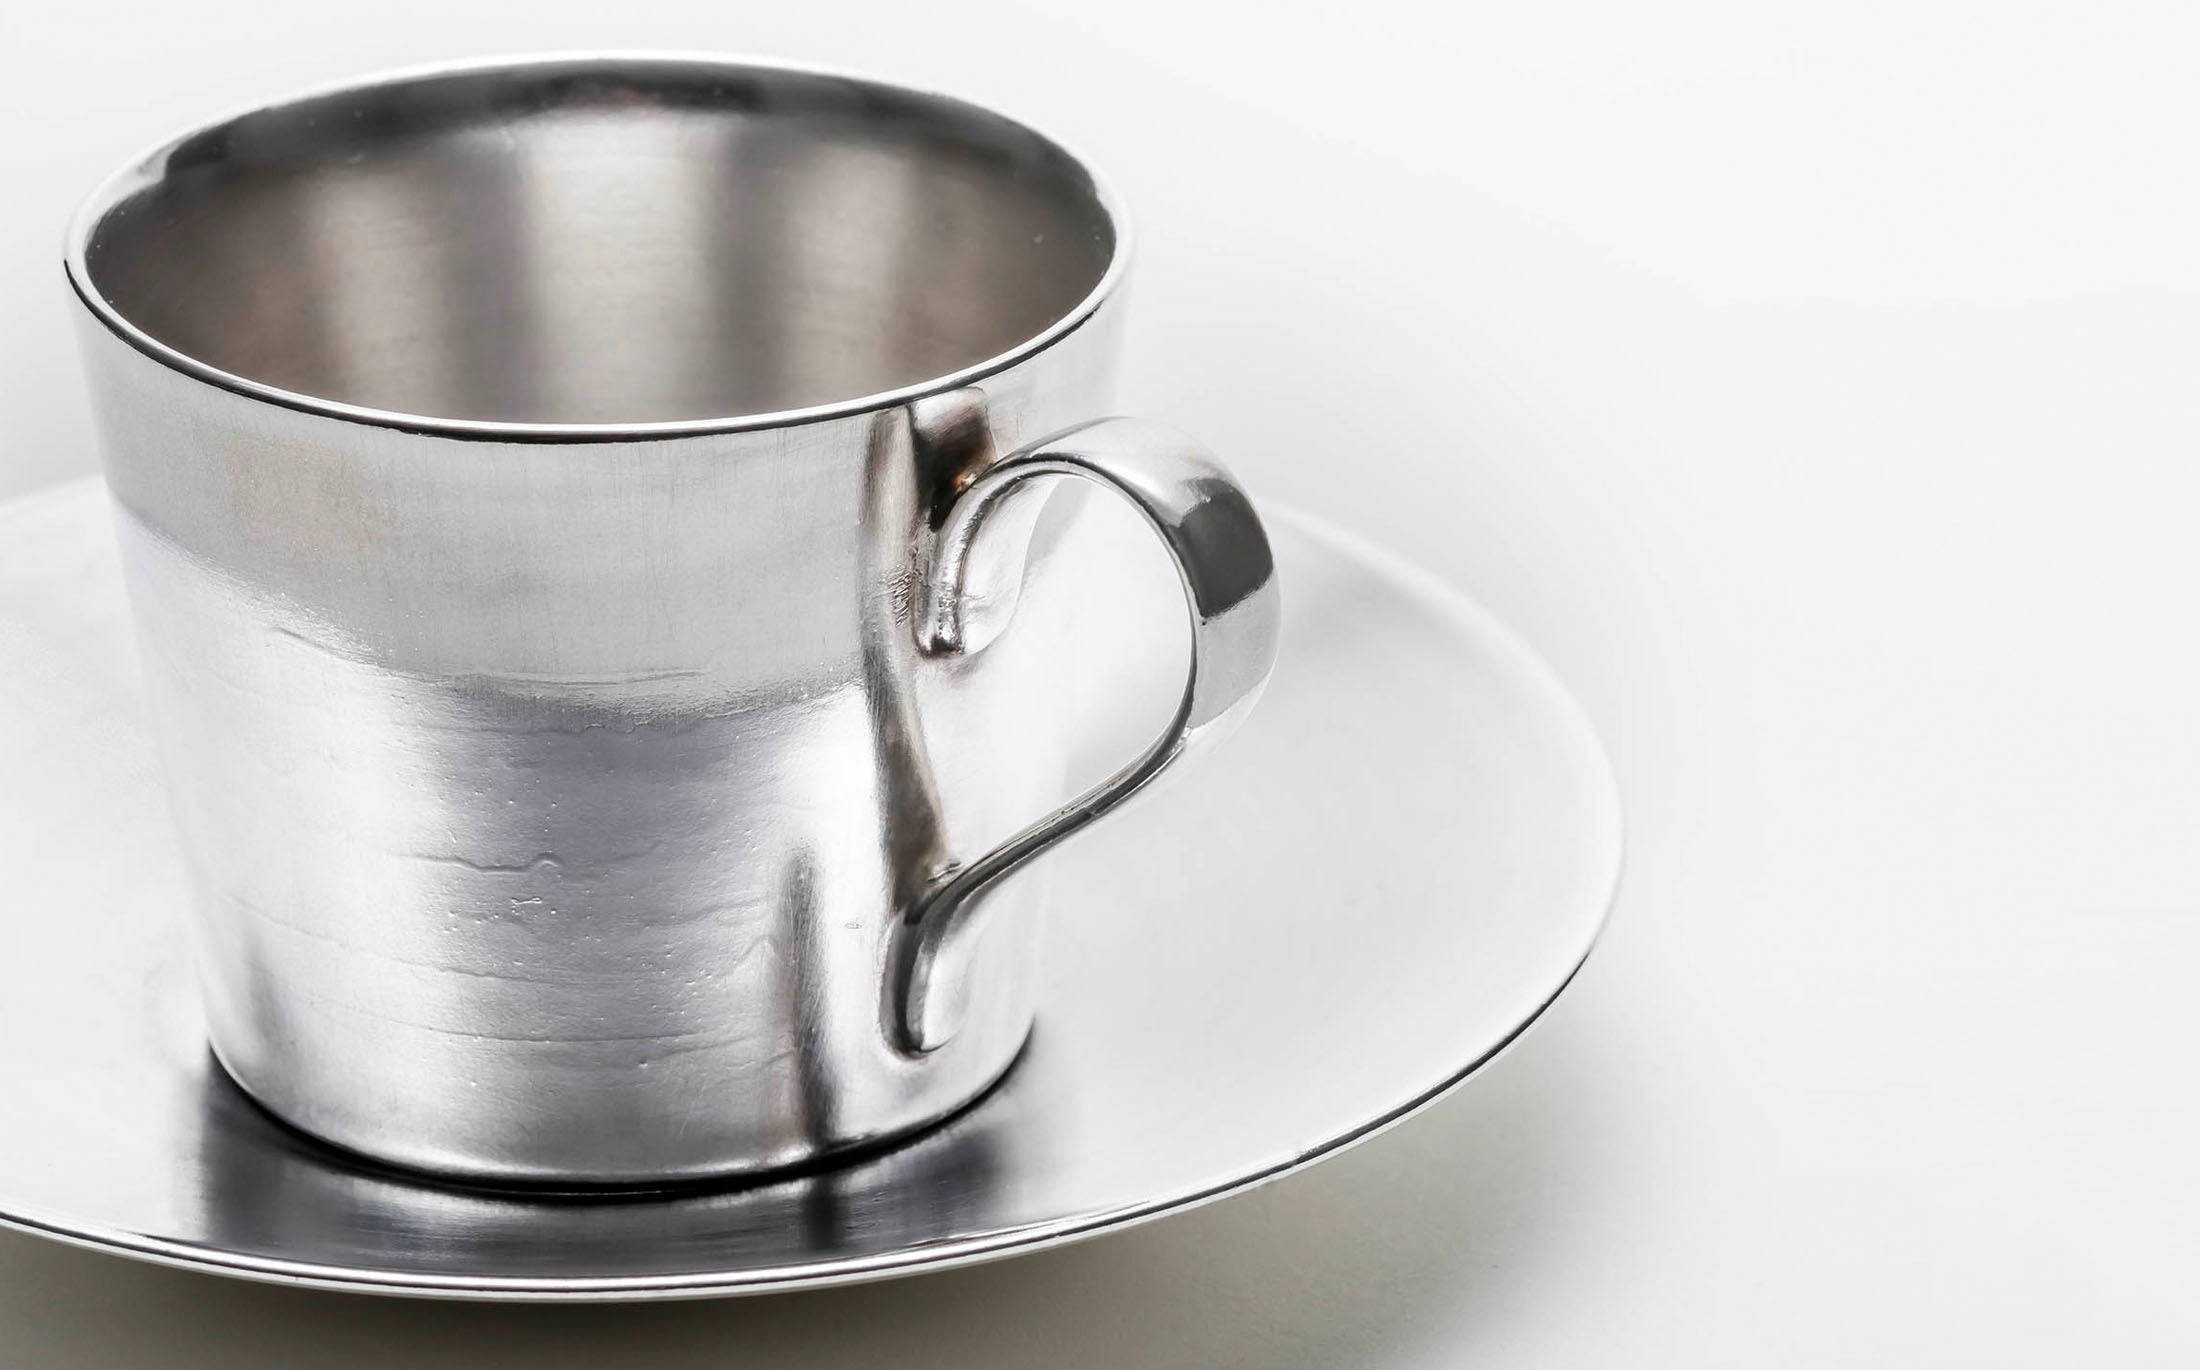 Shirotae - Silvered Porcelain - Demitasse Cup and Saucer